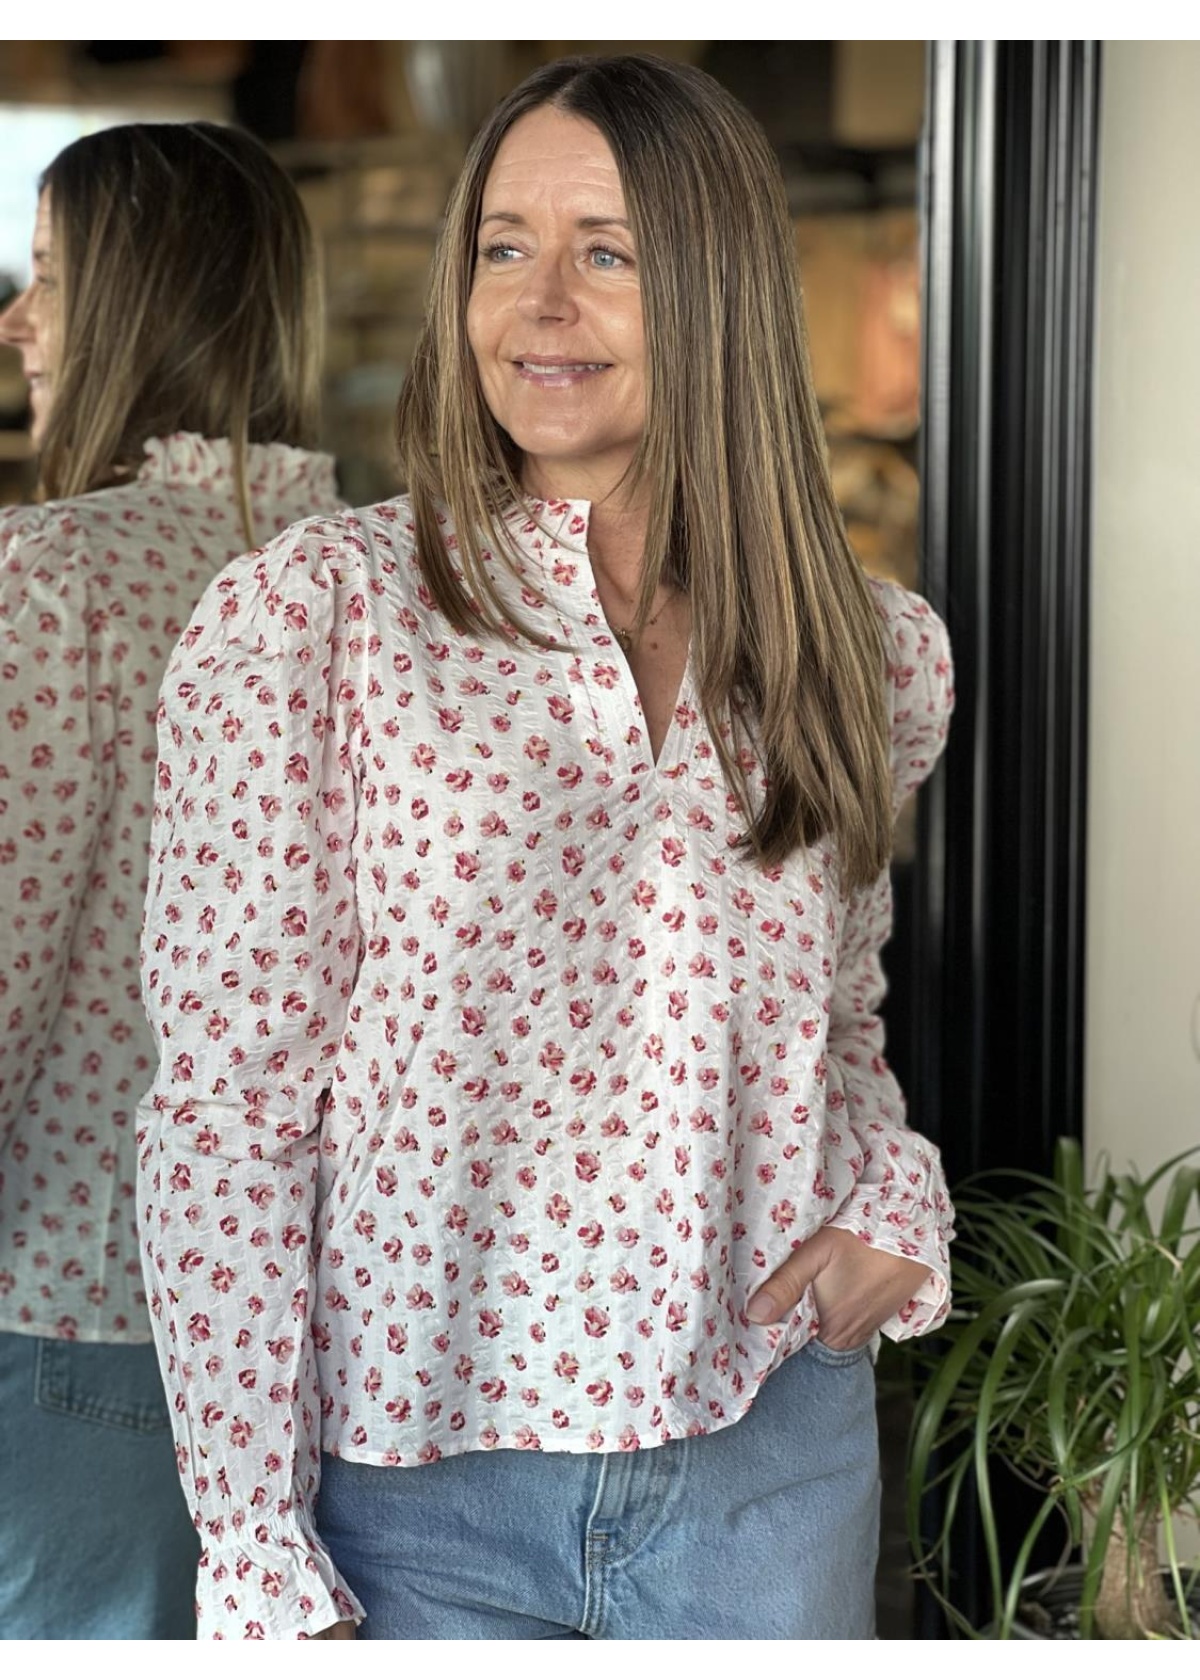 Camilla Pihl Jenny crepe blouse white berry print